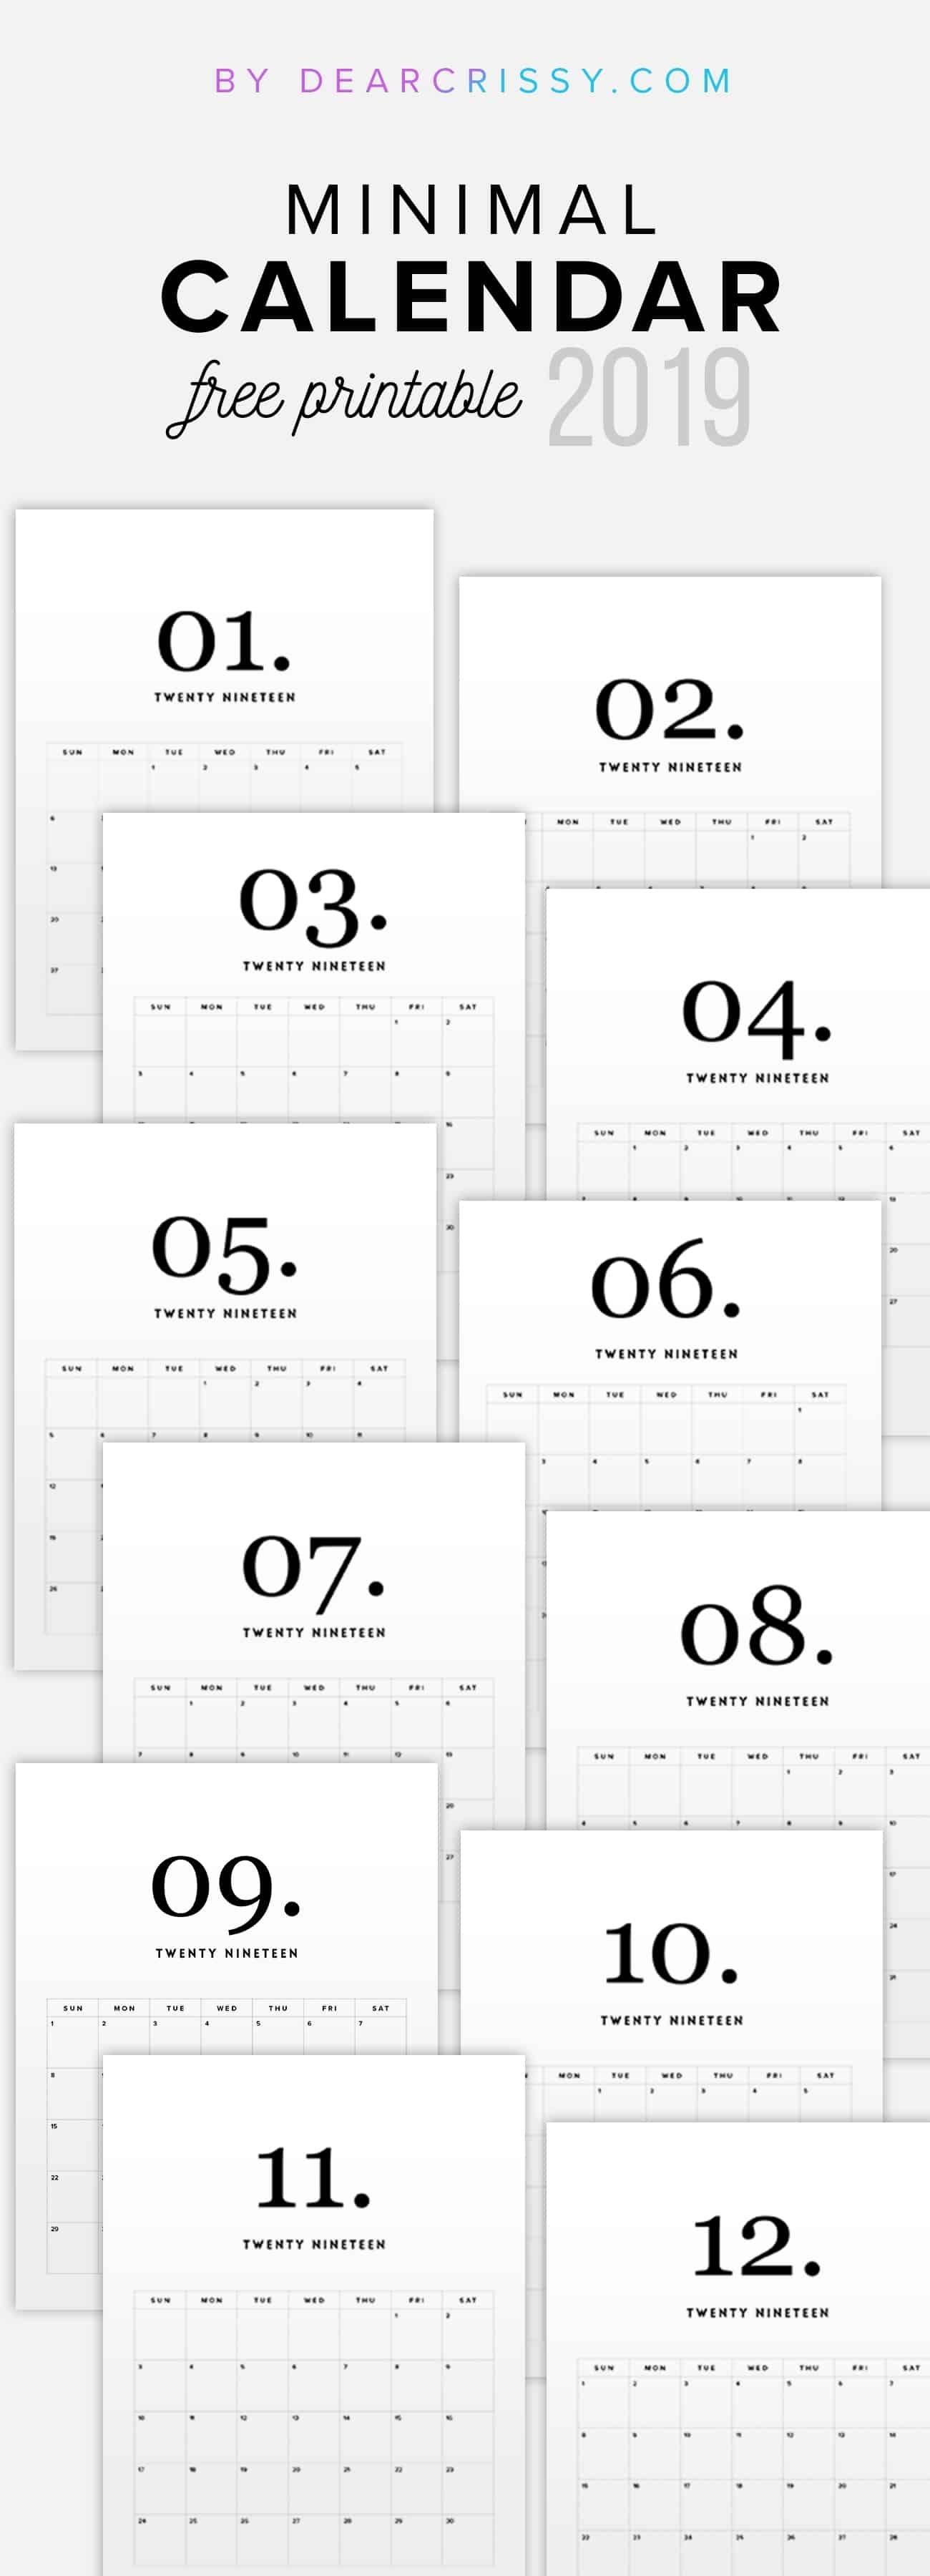 19 Free Printable Calendars To Kick Start The New Year